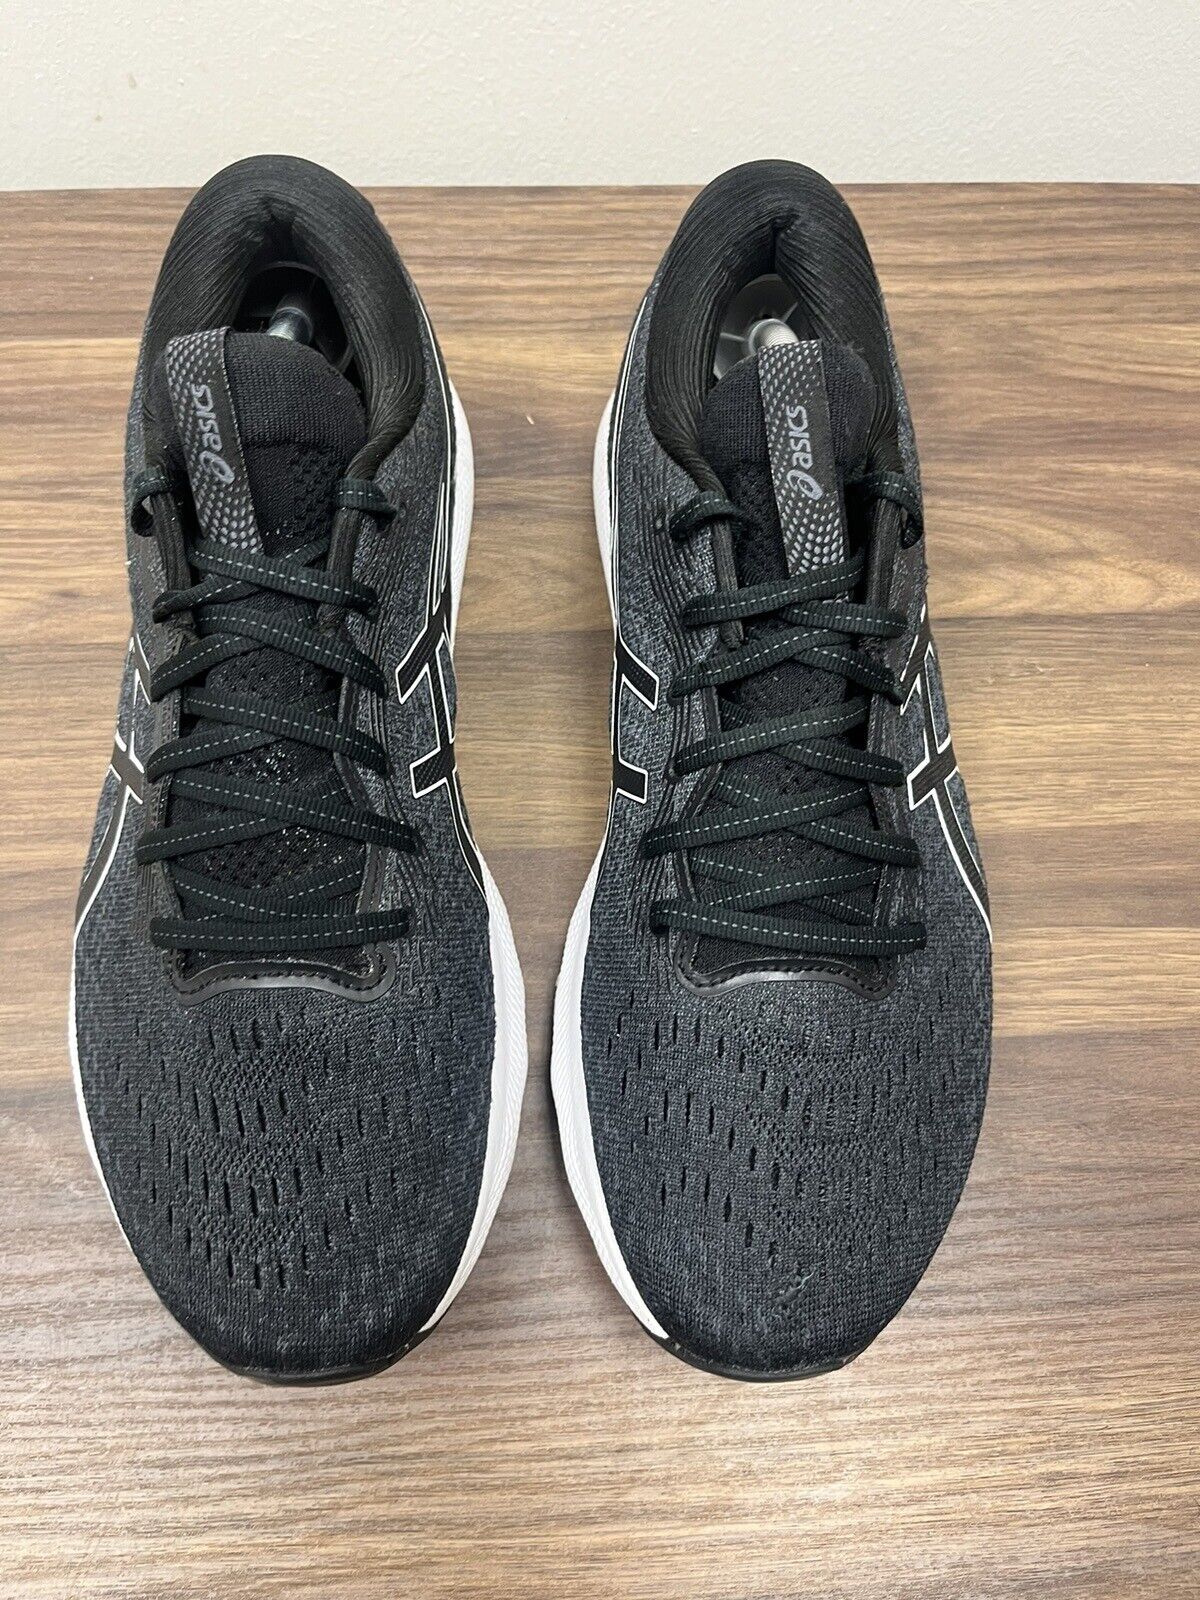 Asics Gel Nimbus 24 Men’s Size 11.5 ‘black | white’ 1011B359 Running Shoes